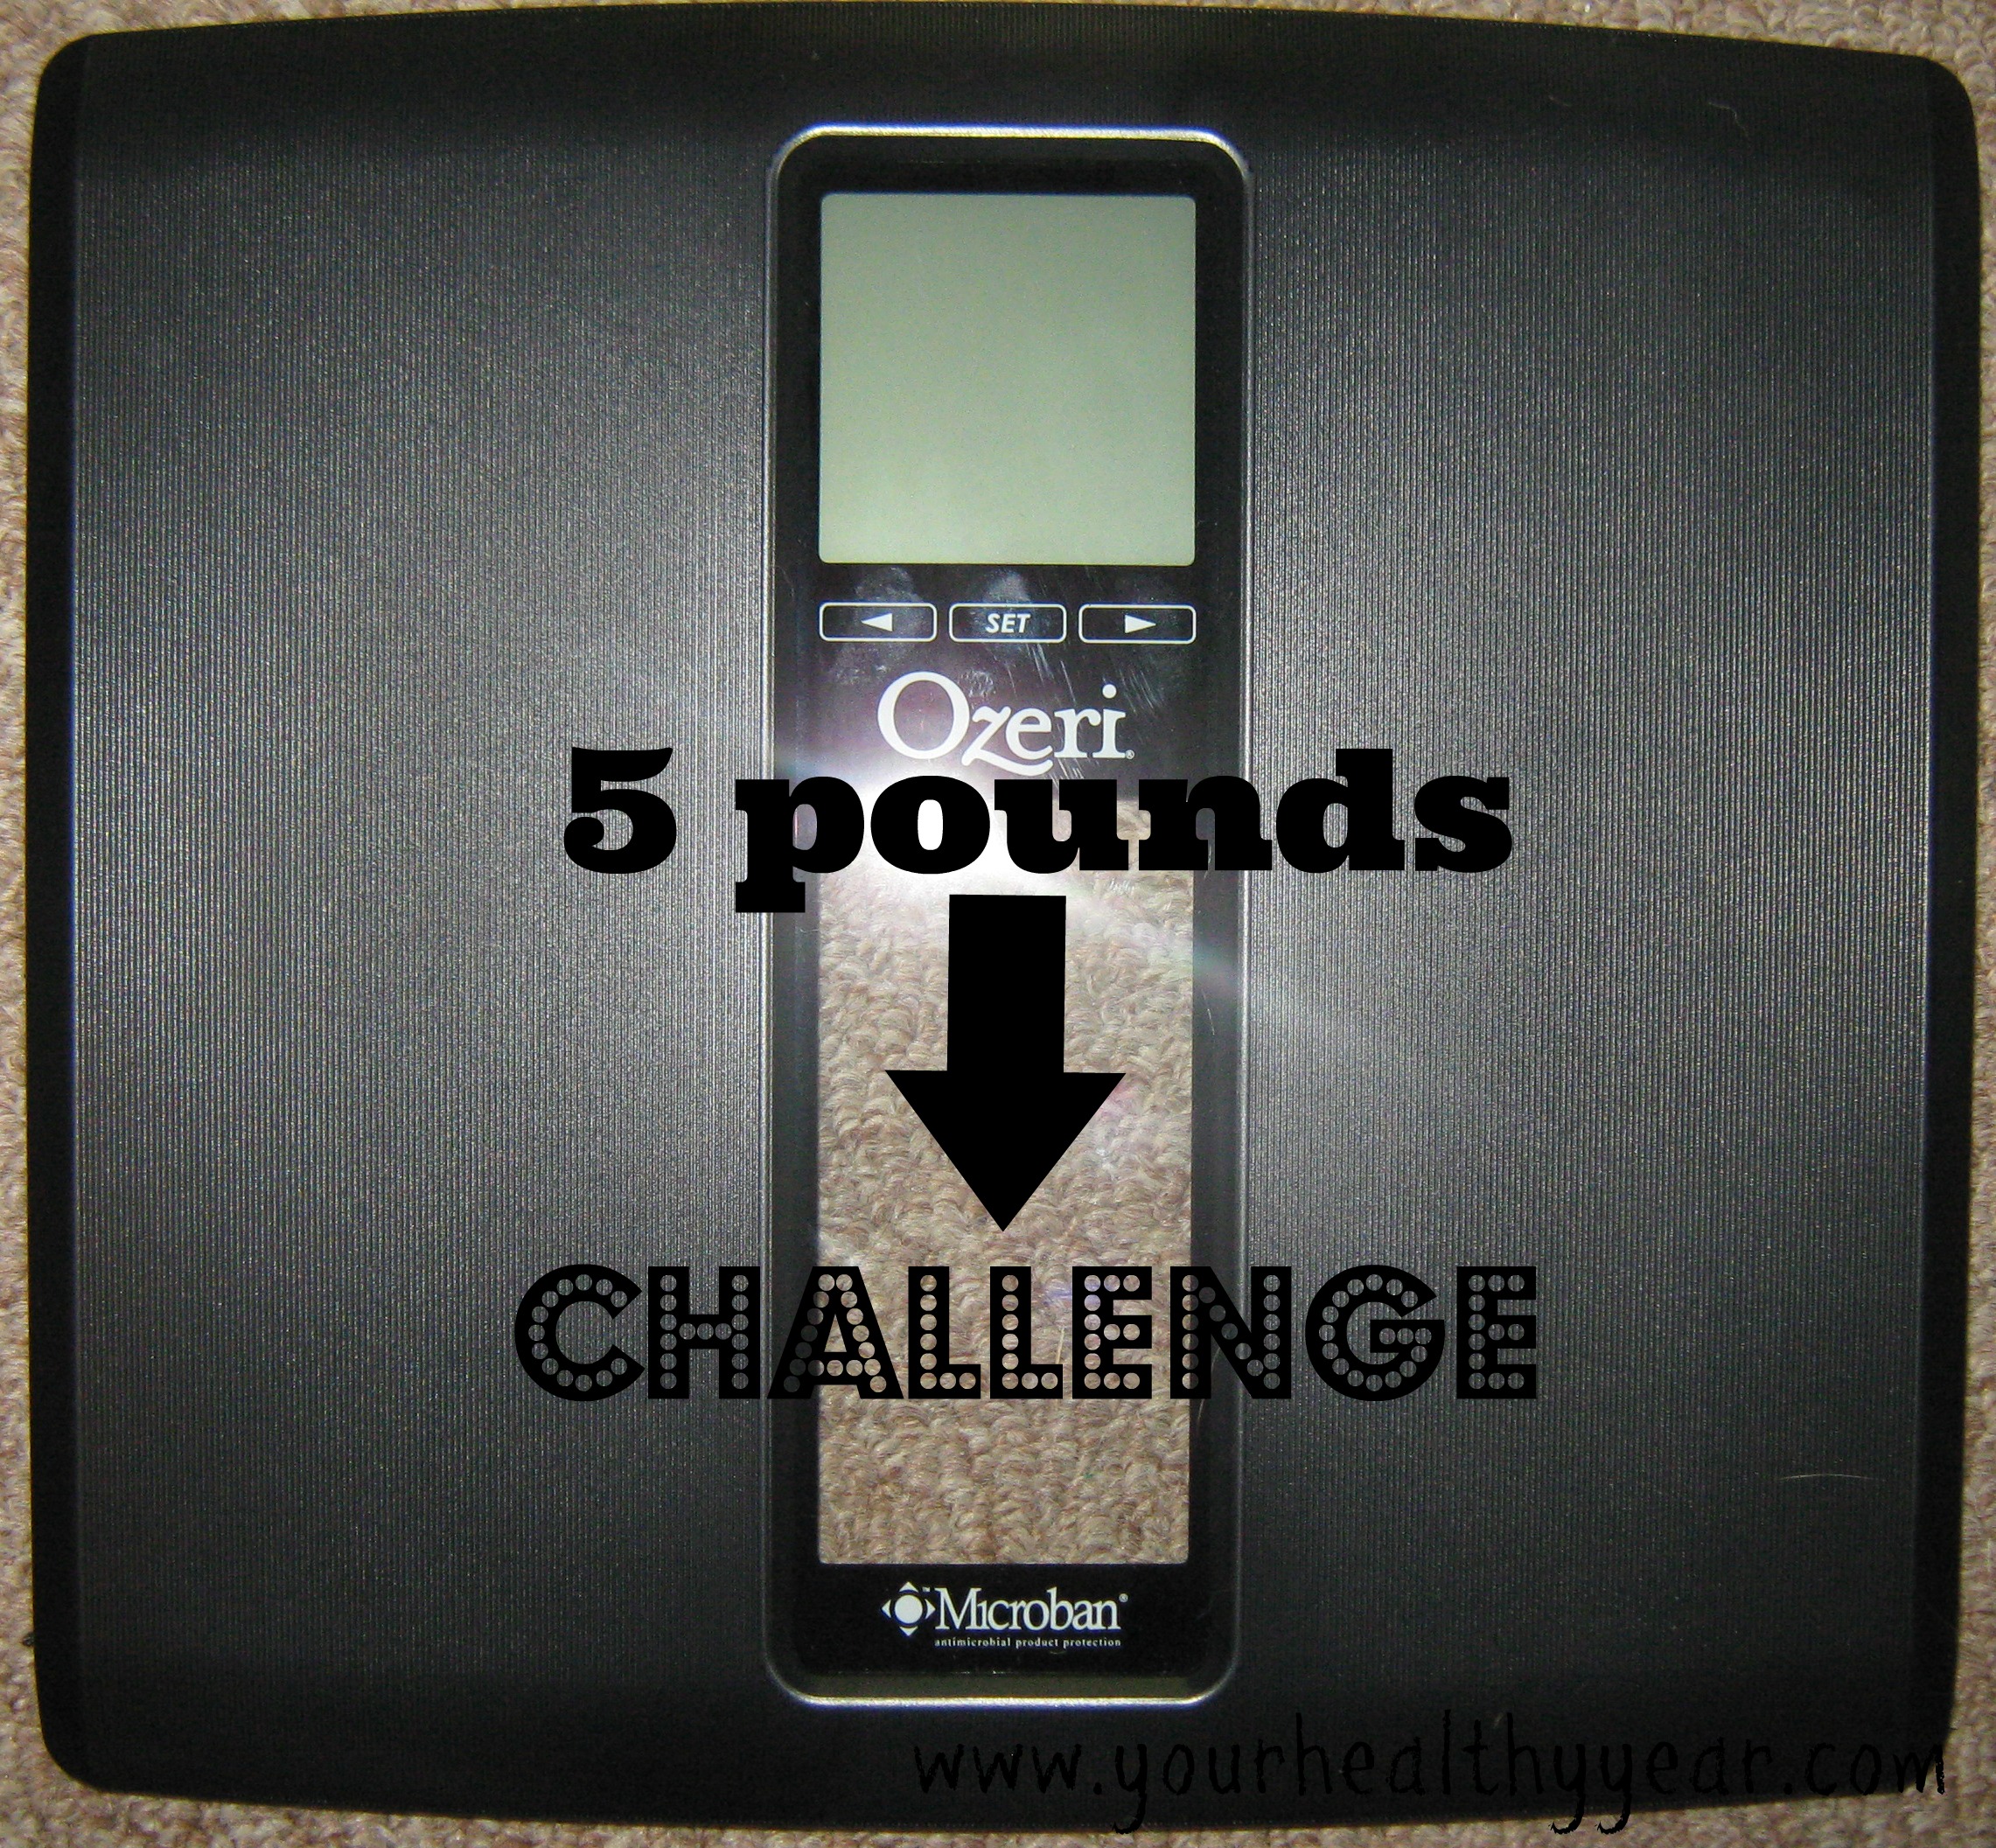 5lbs pounds challenge